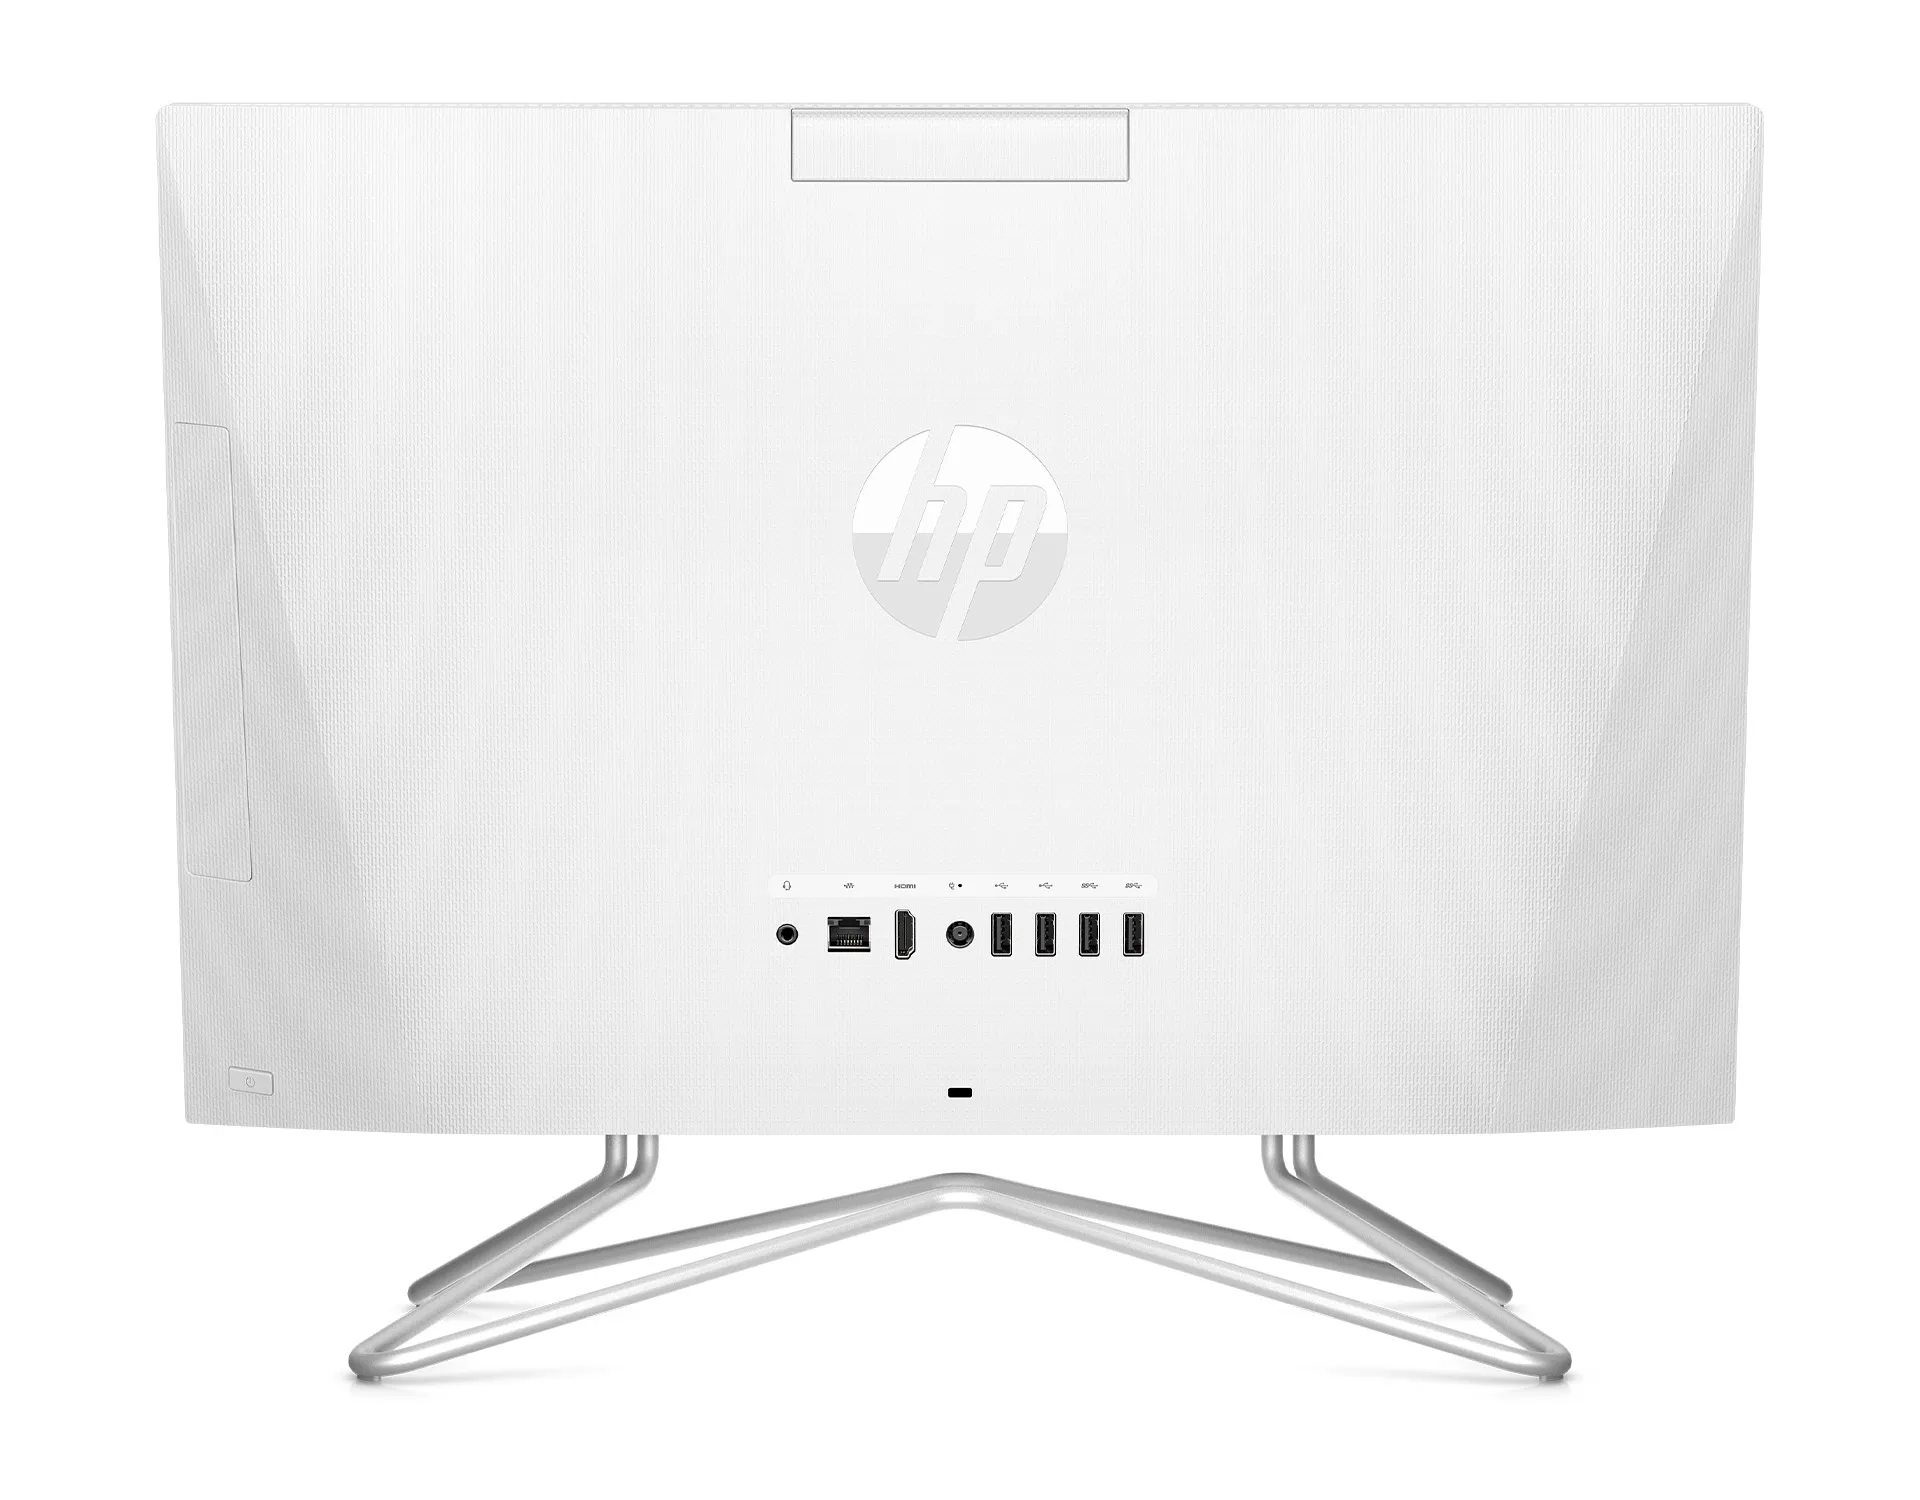 HP All-in-One 22（インテル） 製品詳細 - デスクトップパソコン | 日本HP